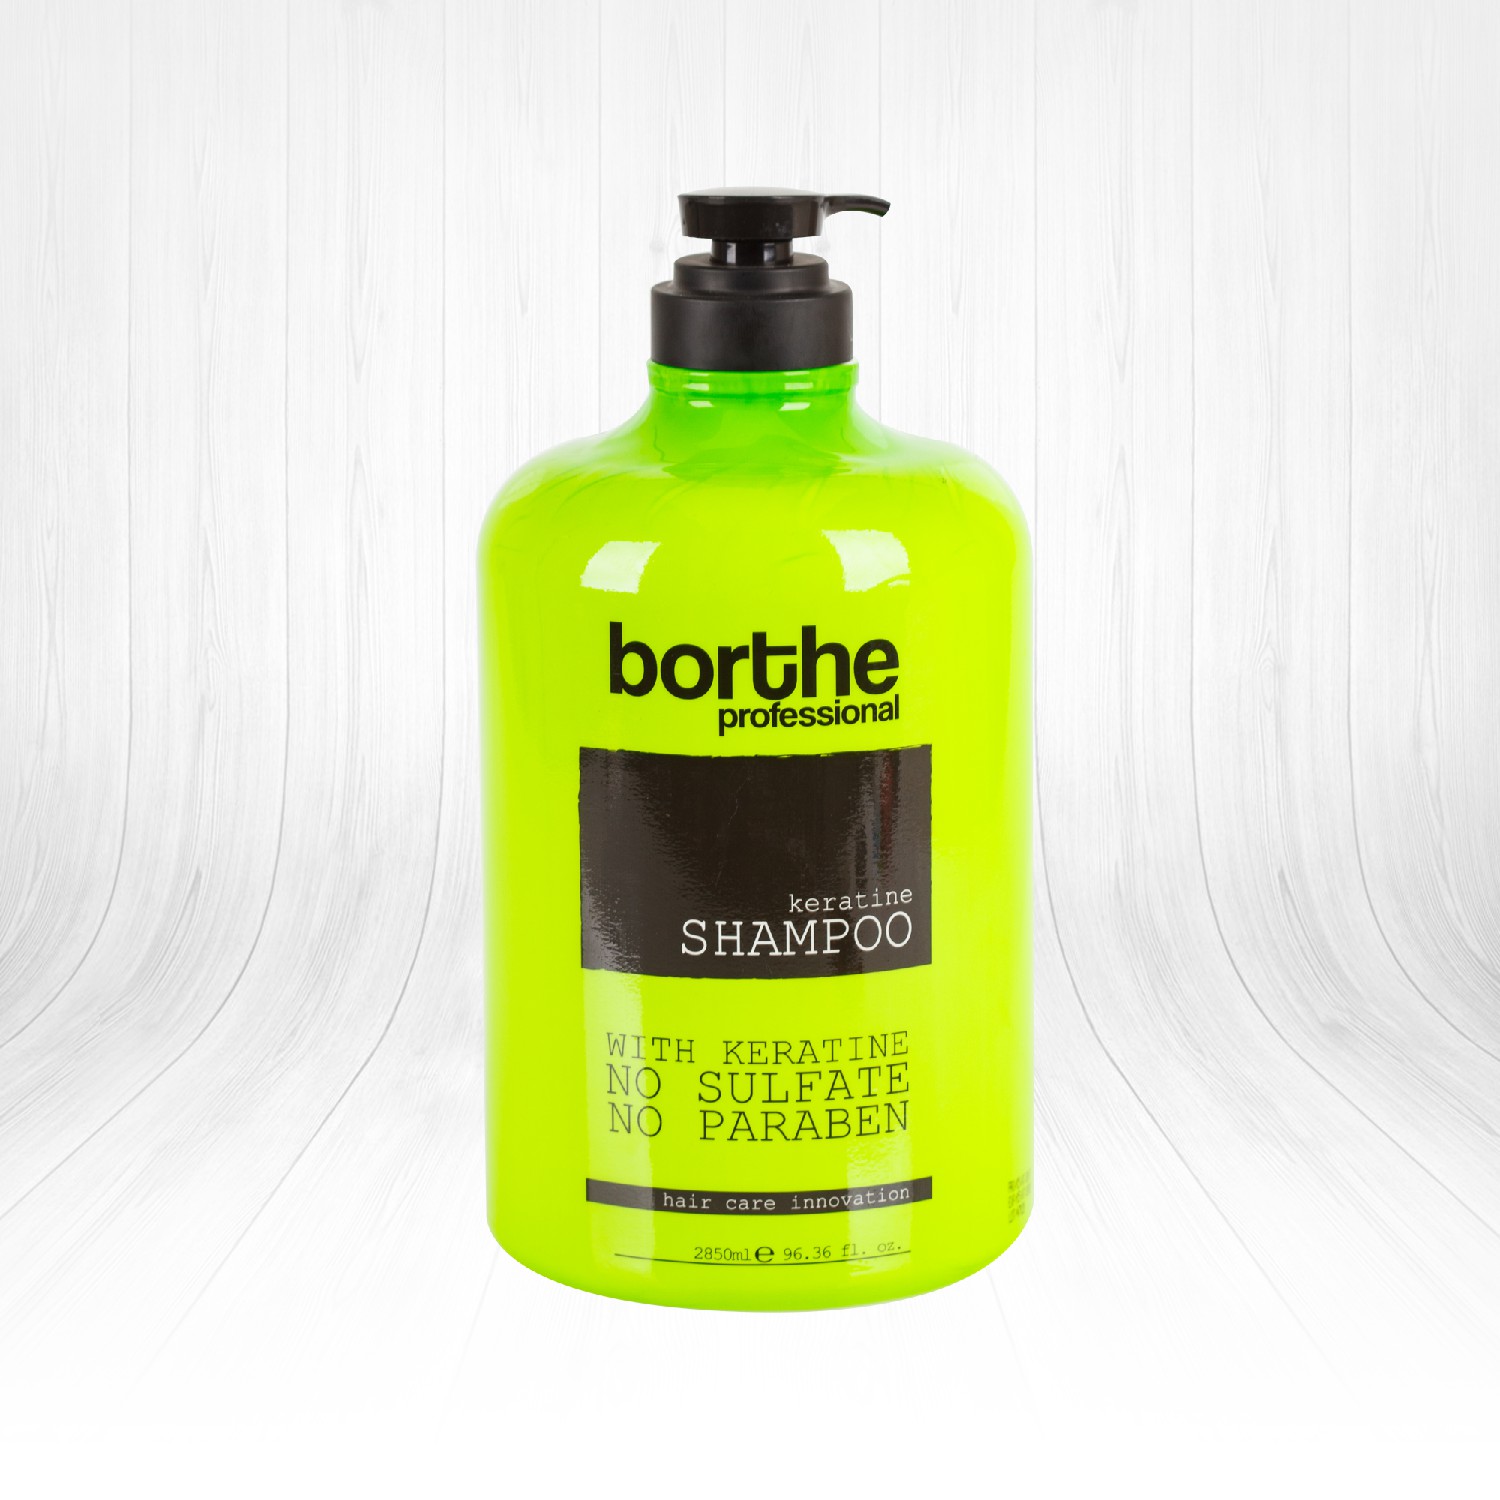 Borthe Professional Hair Care Keratine Shampoo